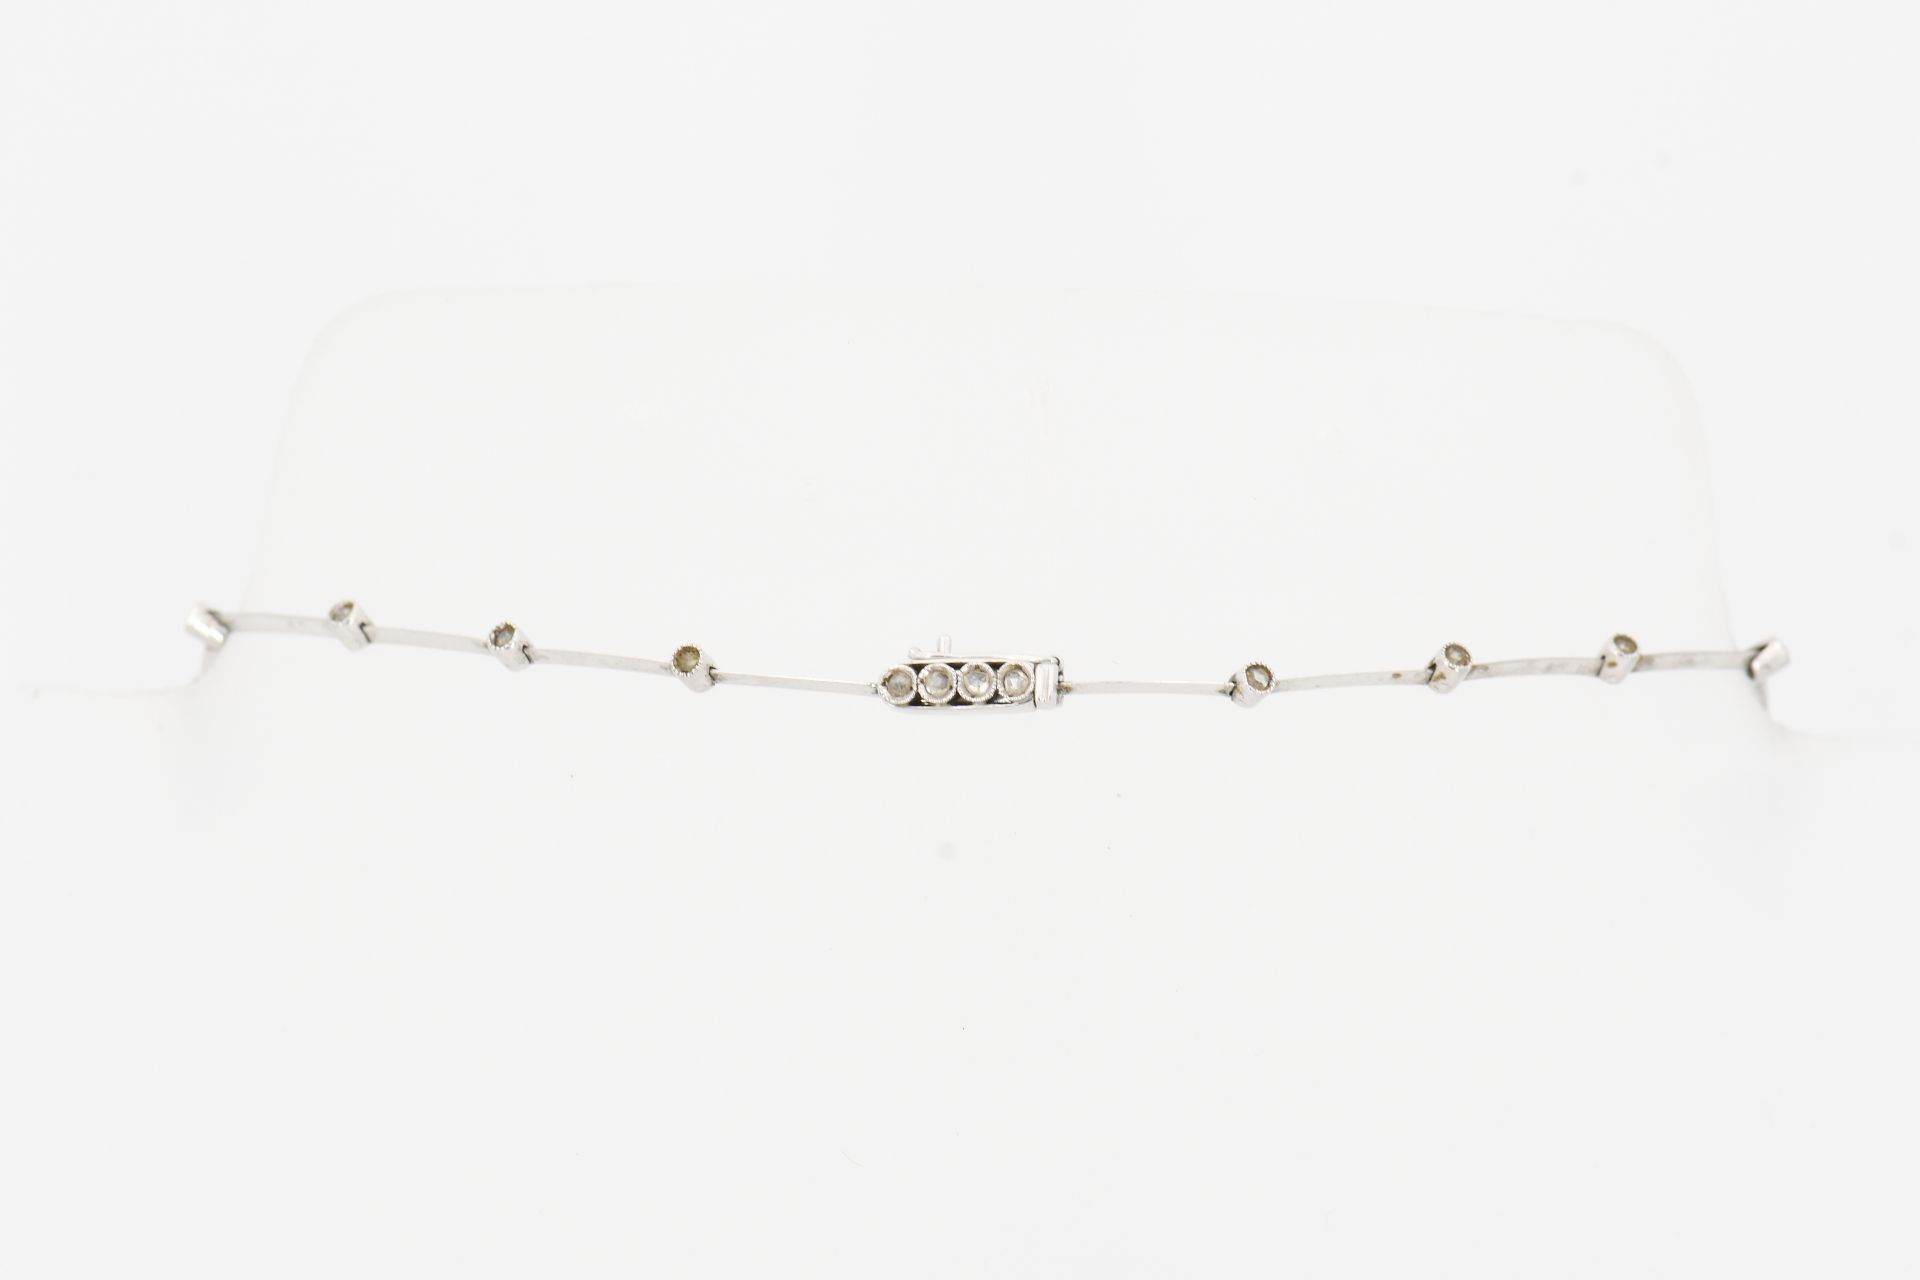  Historical-Diamond-Necklace - Image 6 of 6